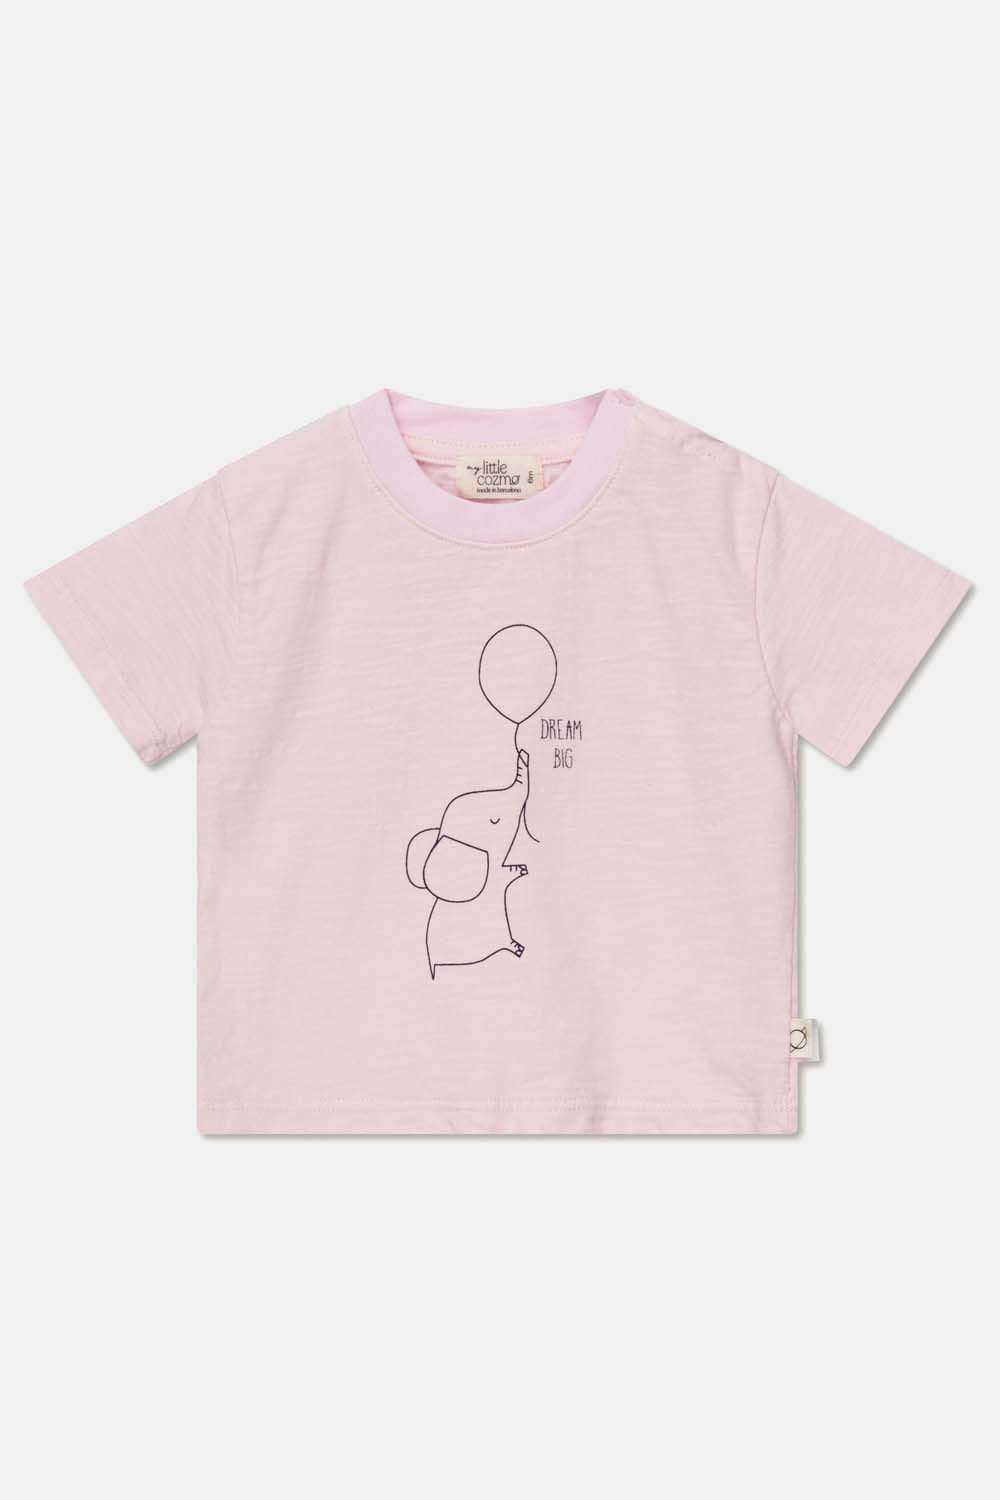 My Little Cozmo - Baby Shirt Elefant pink - AURYN Shop